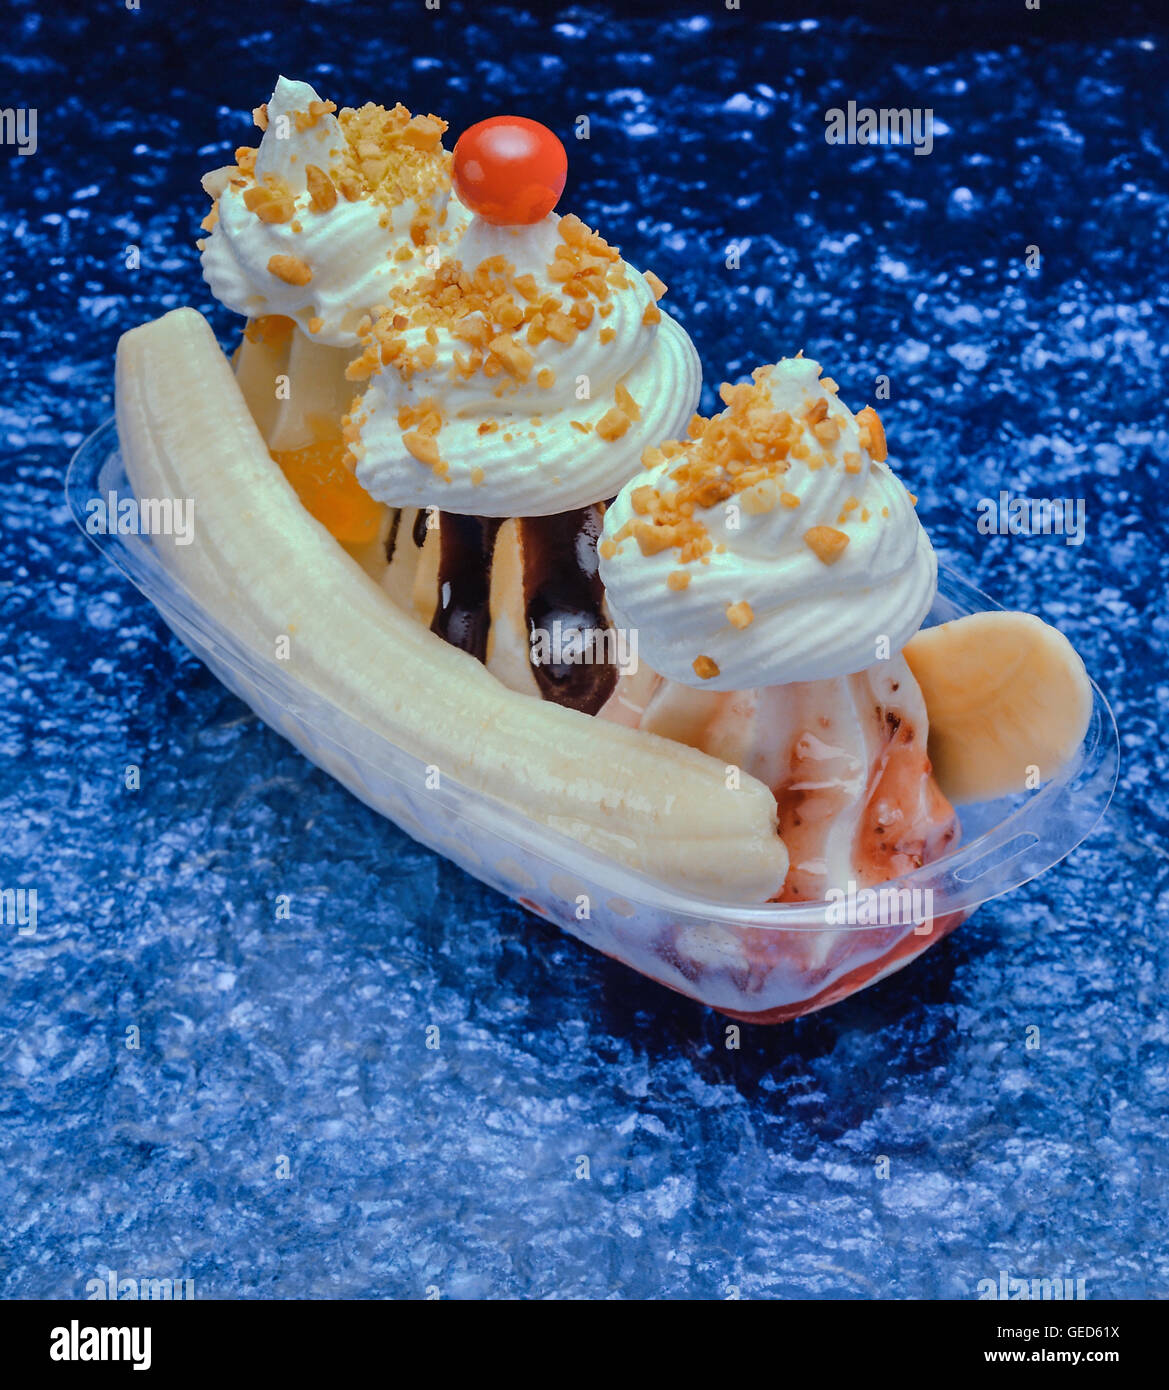 Banana split coupe de glaces Photo Stock - Alamy